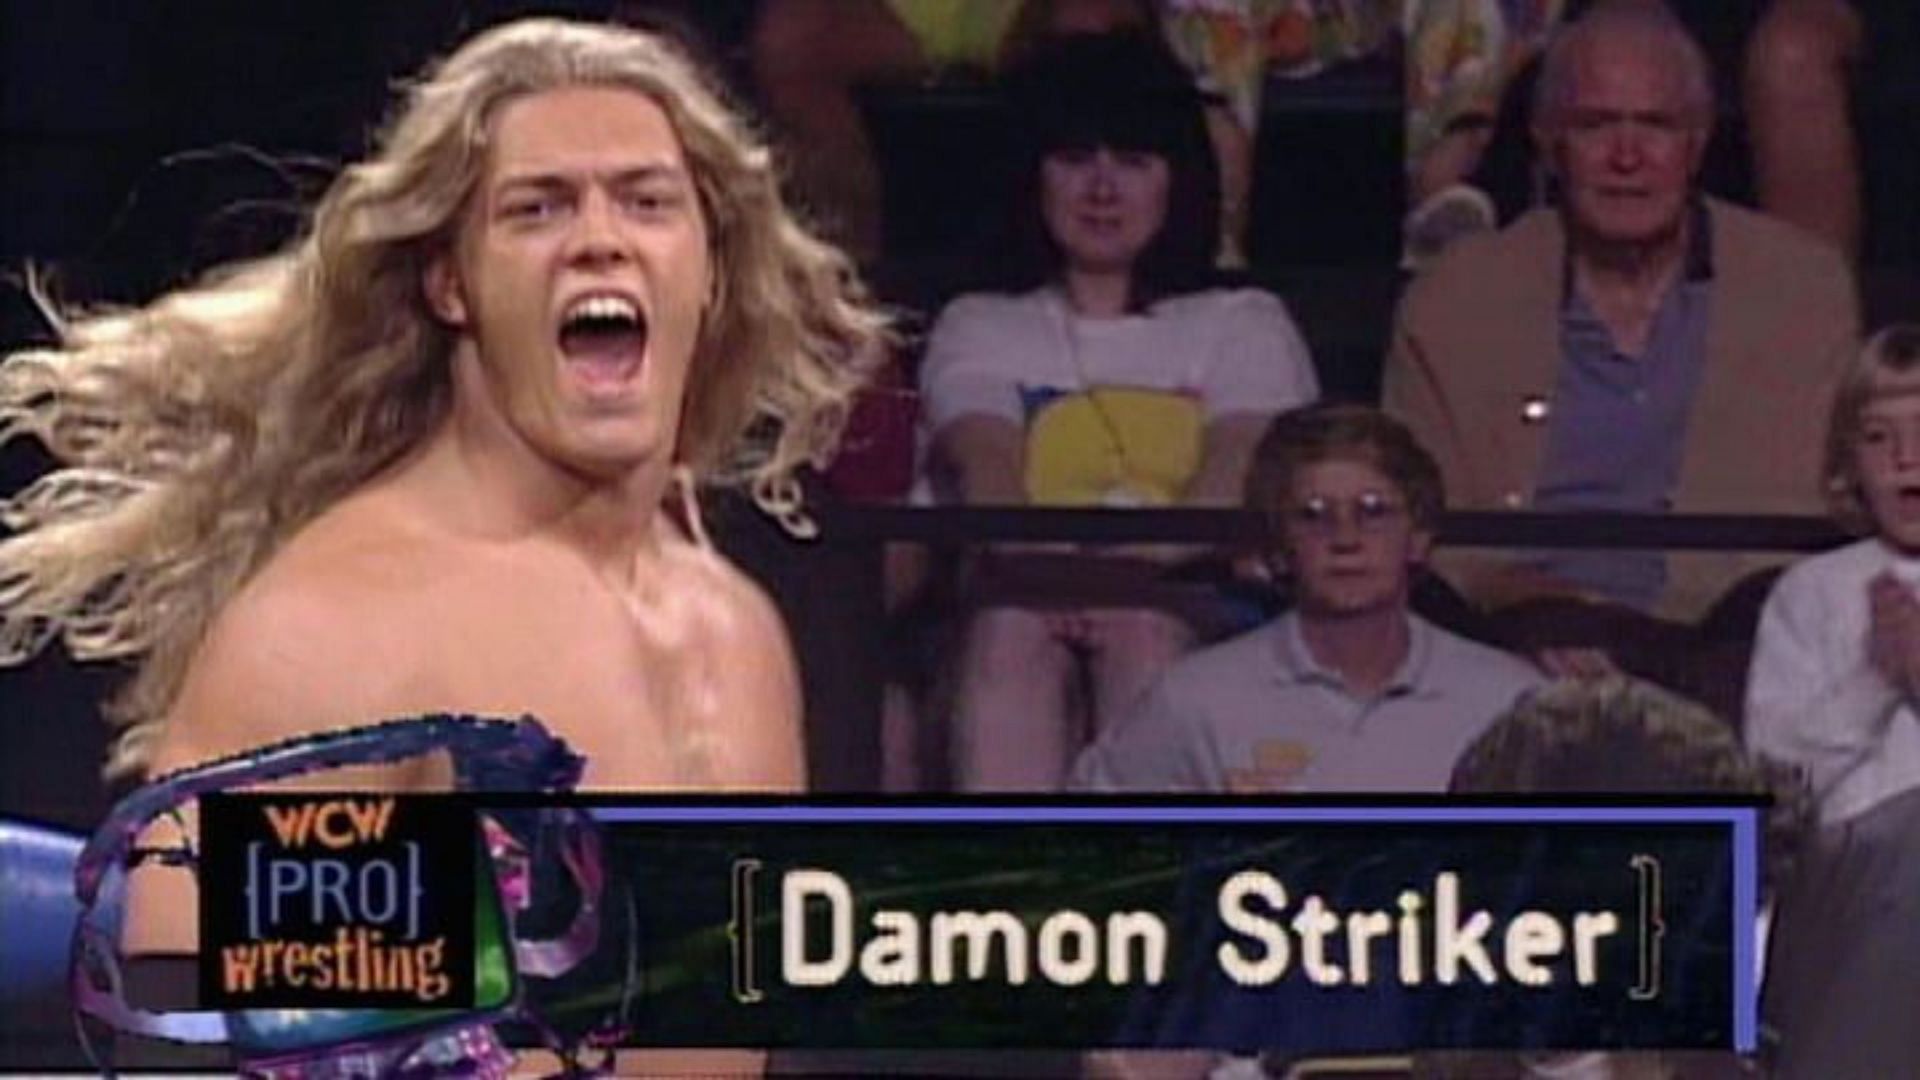 Edge wrestled as Damon Striker in WCW